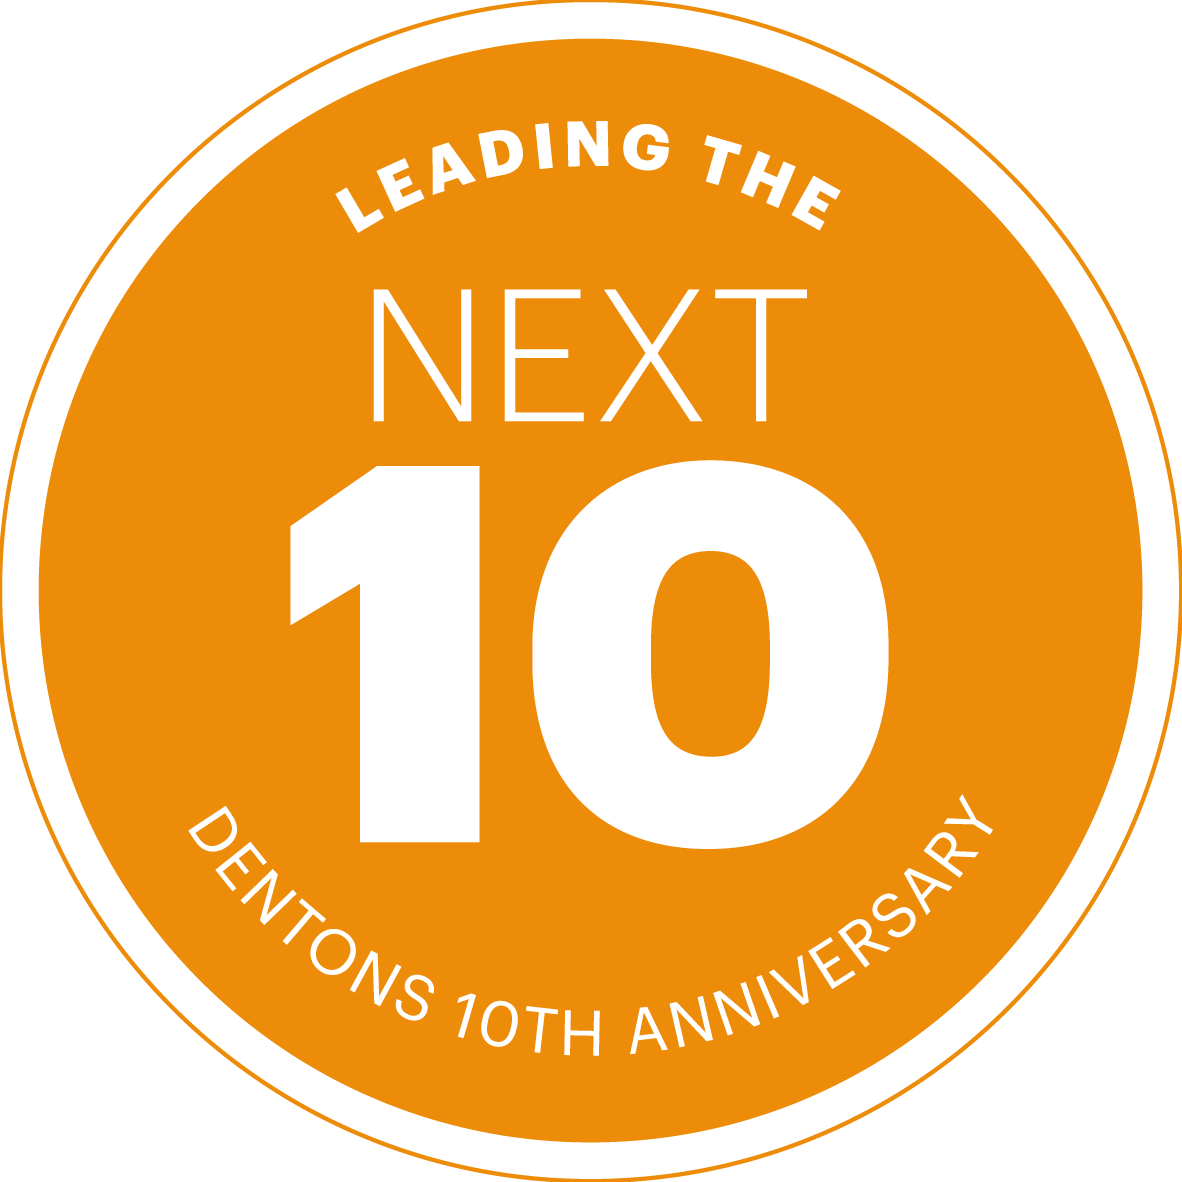 Leading the next 10 - Dentons 10th anniversary badge